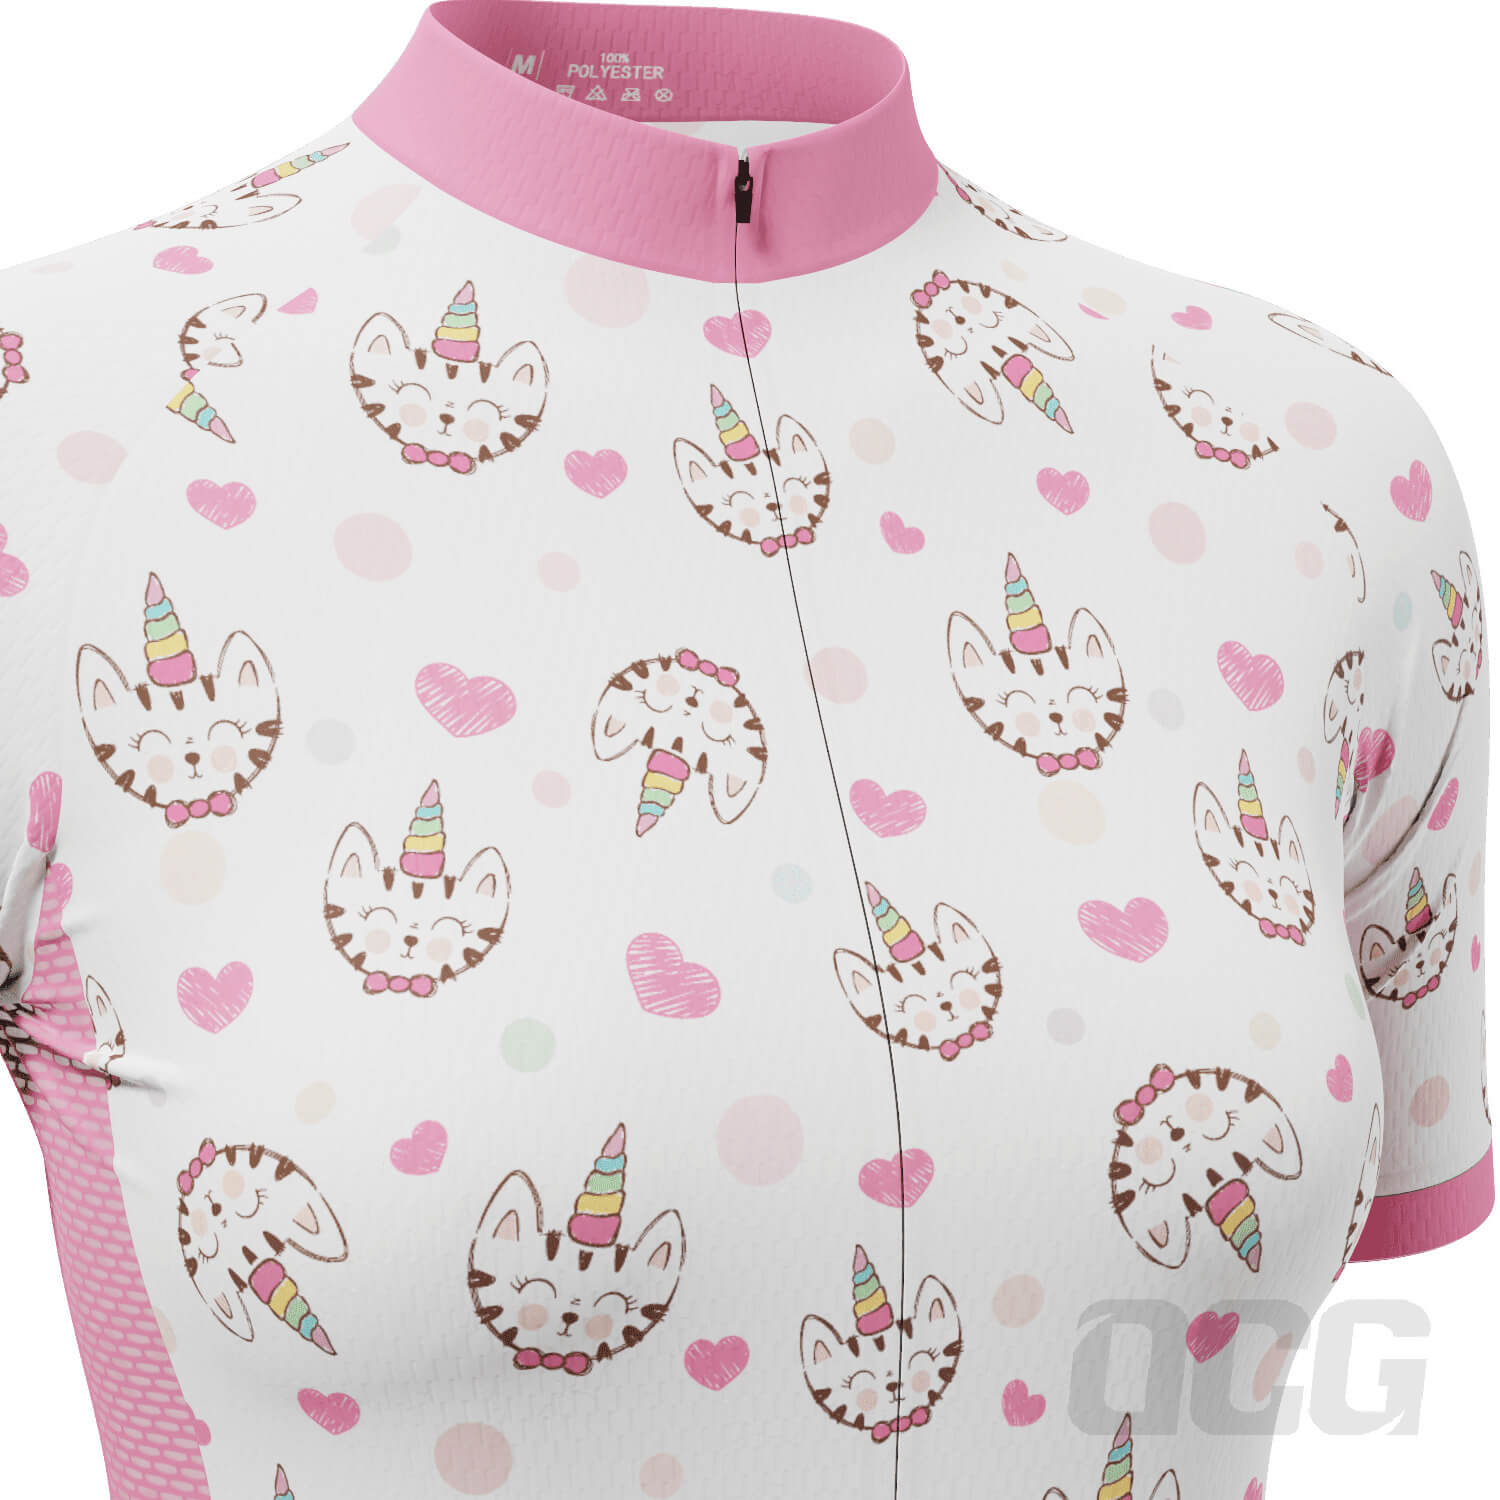 Women's Kitty Corn Unicorn Short Sleeve Cycling Jersey